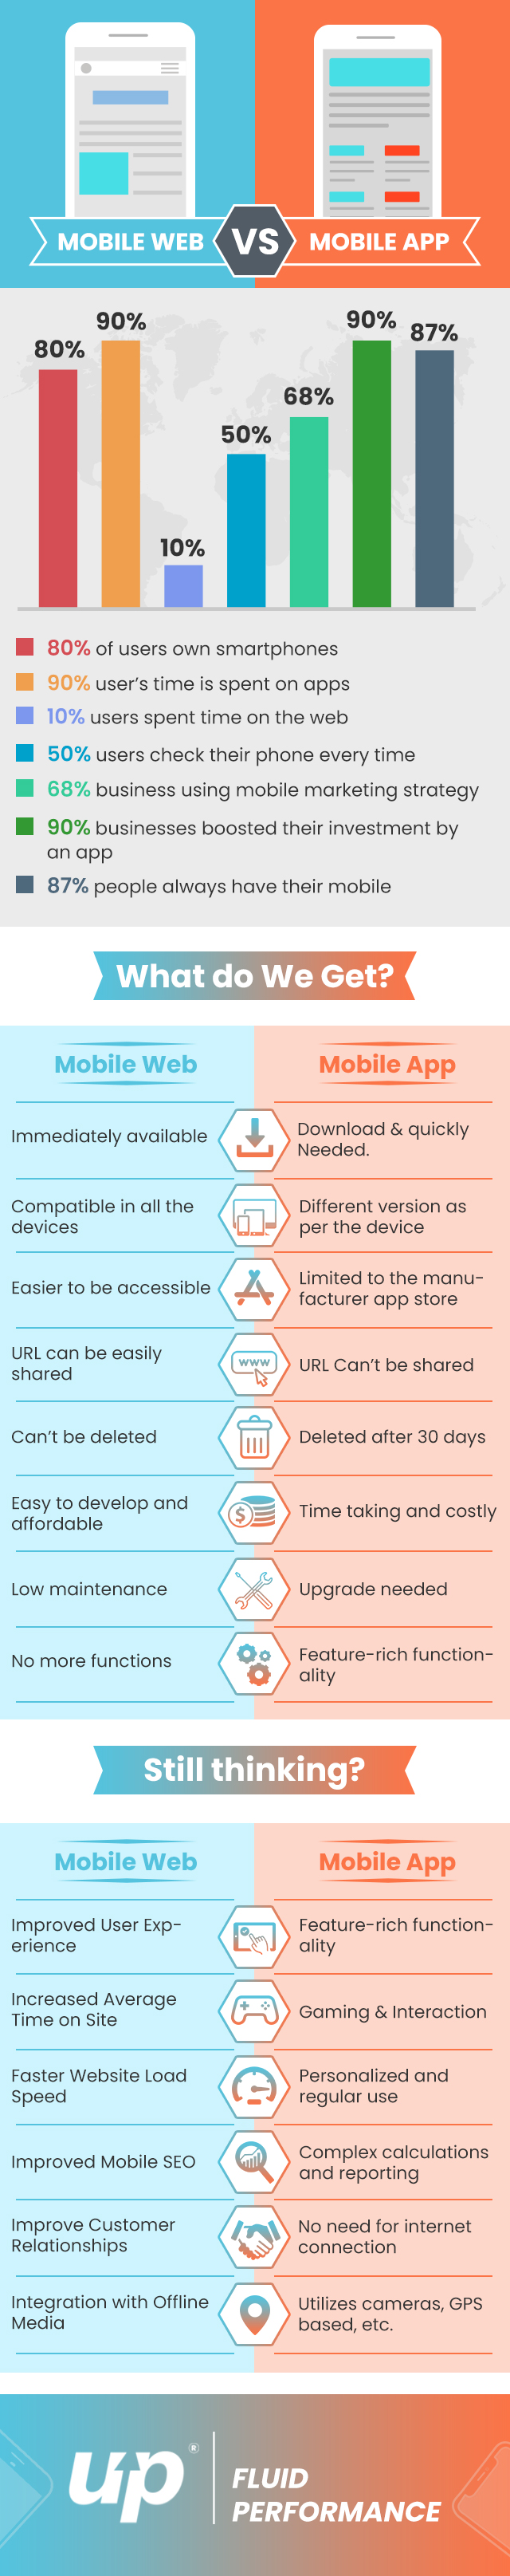 Mobile web vs Mobile App infographic